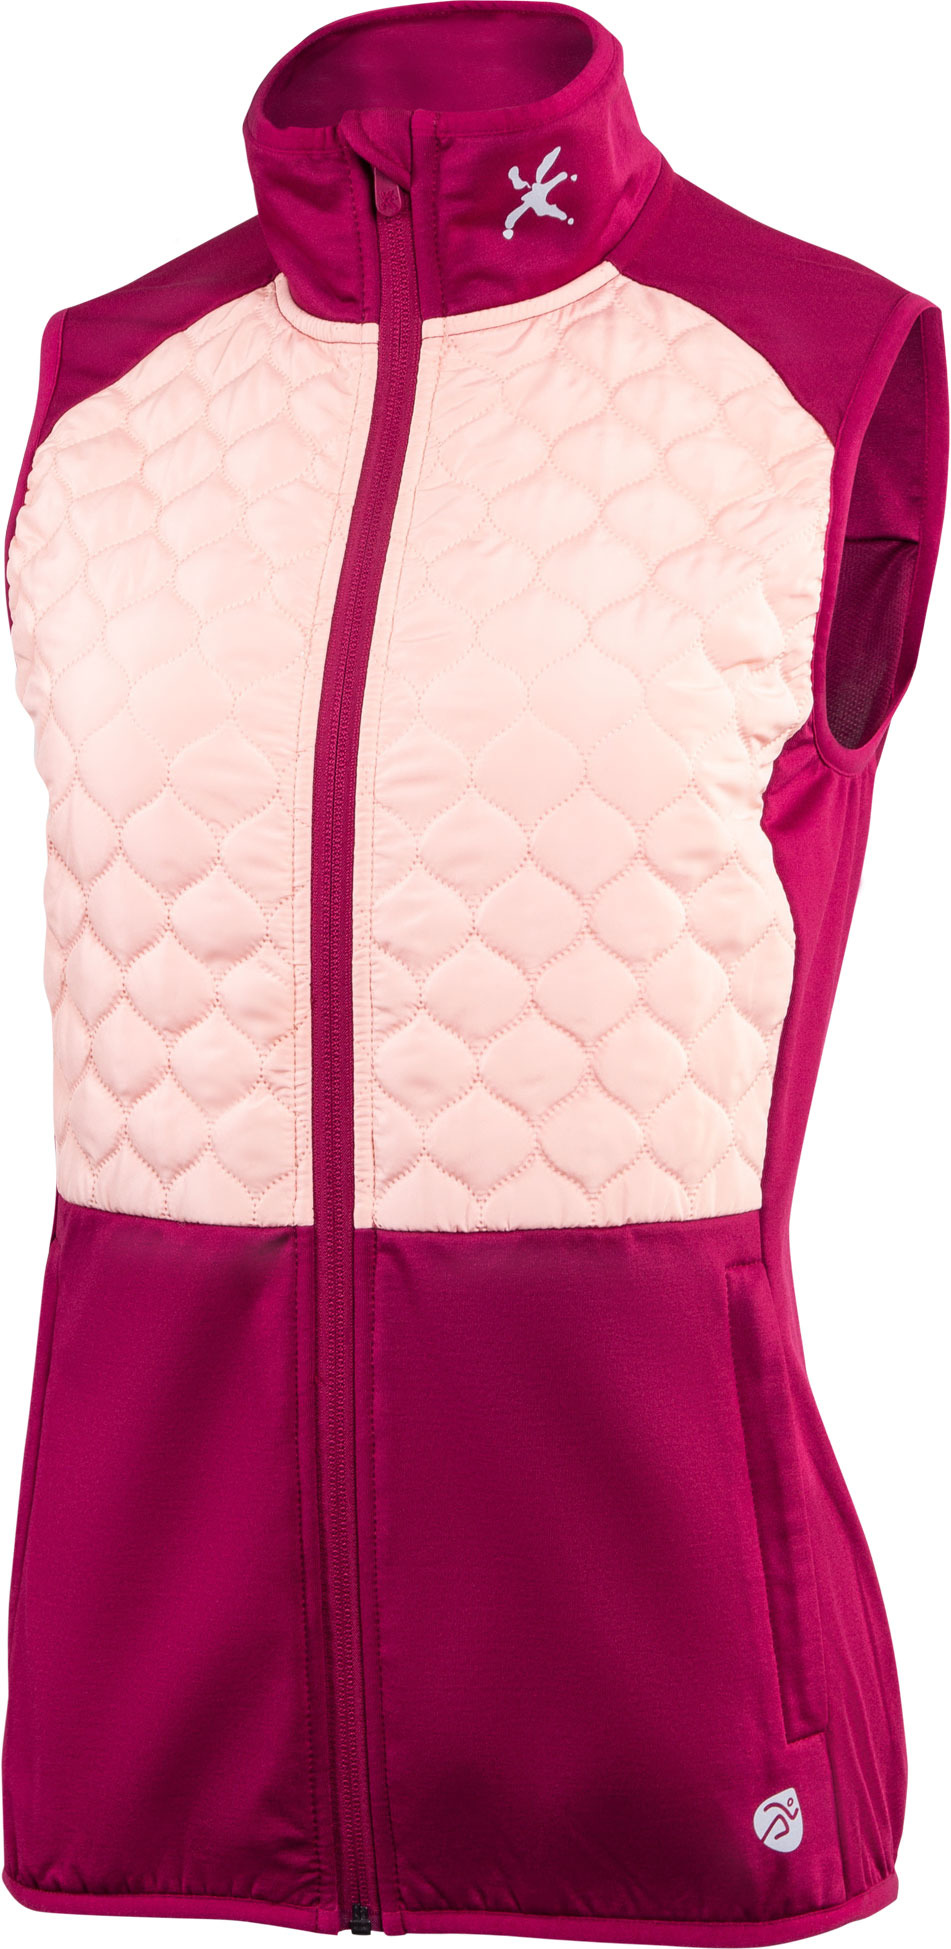 Women's winter running vest